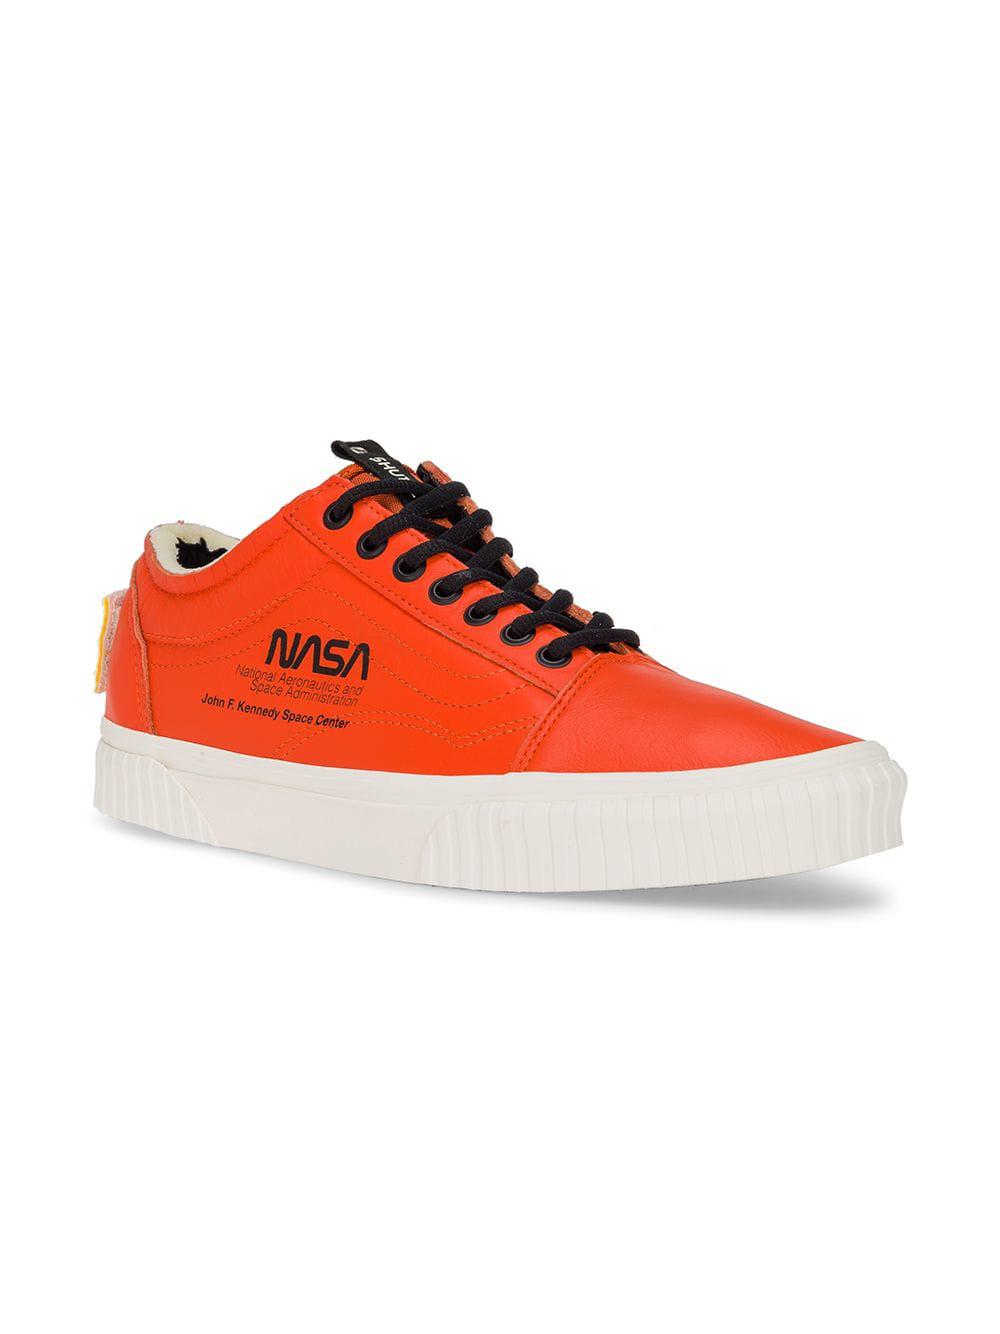 nasa sneakers orange